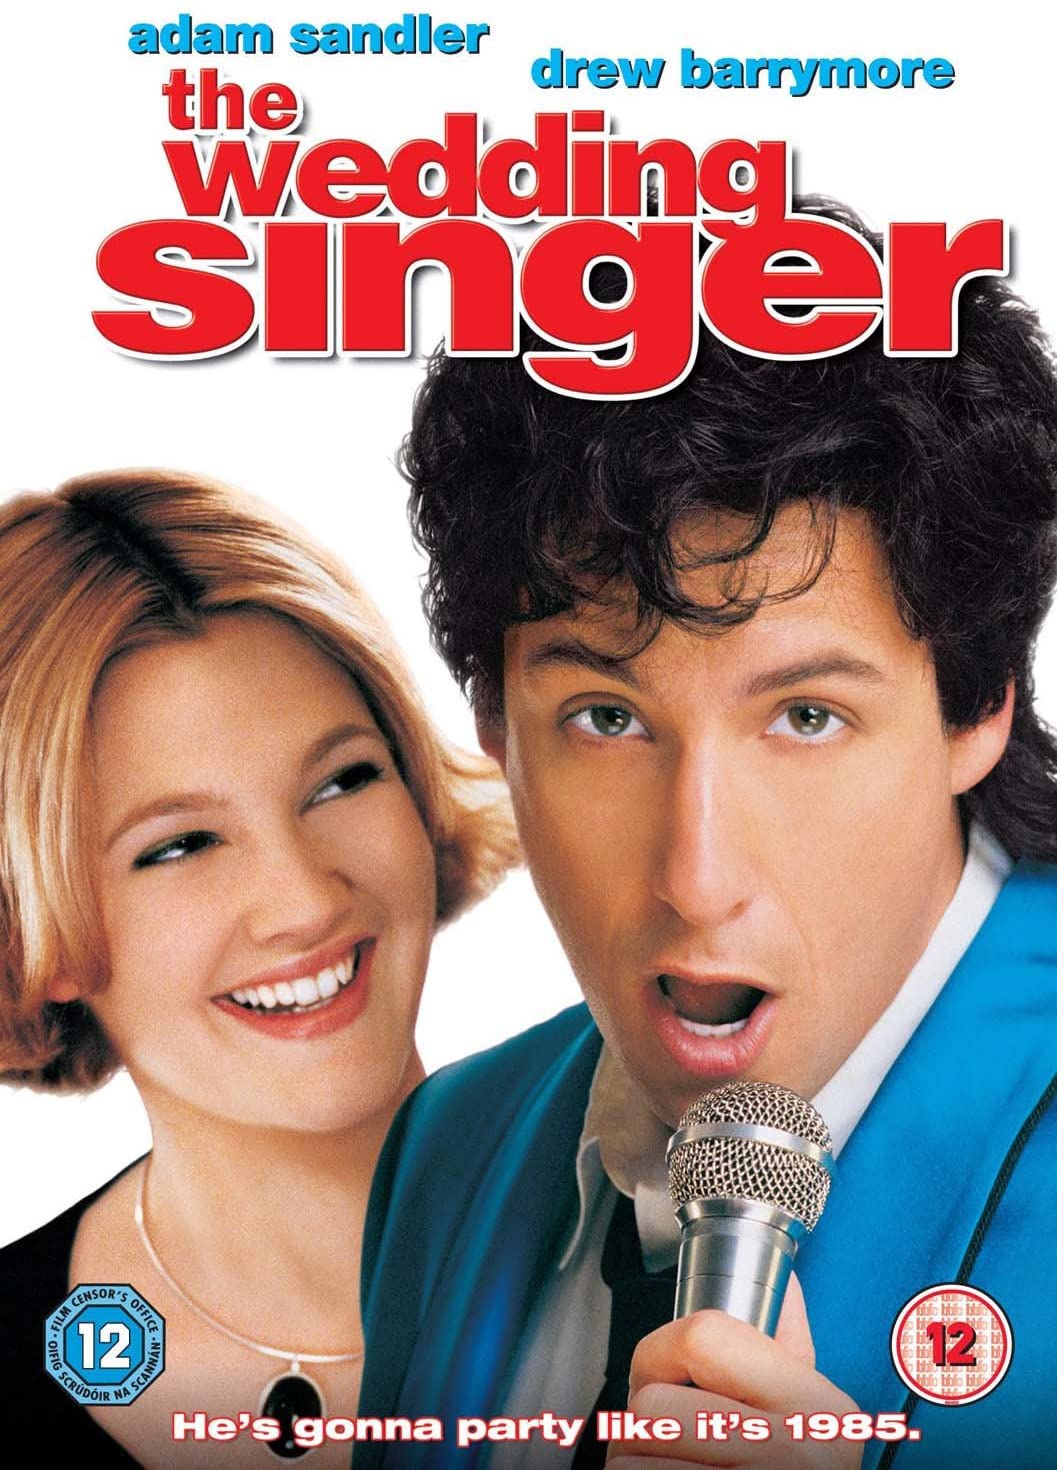 The Wedding Singer [1998]  -Romance/Comedy [DVD]